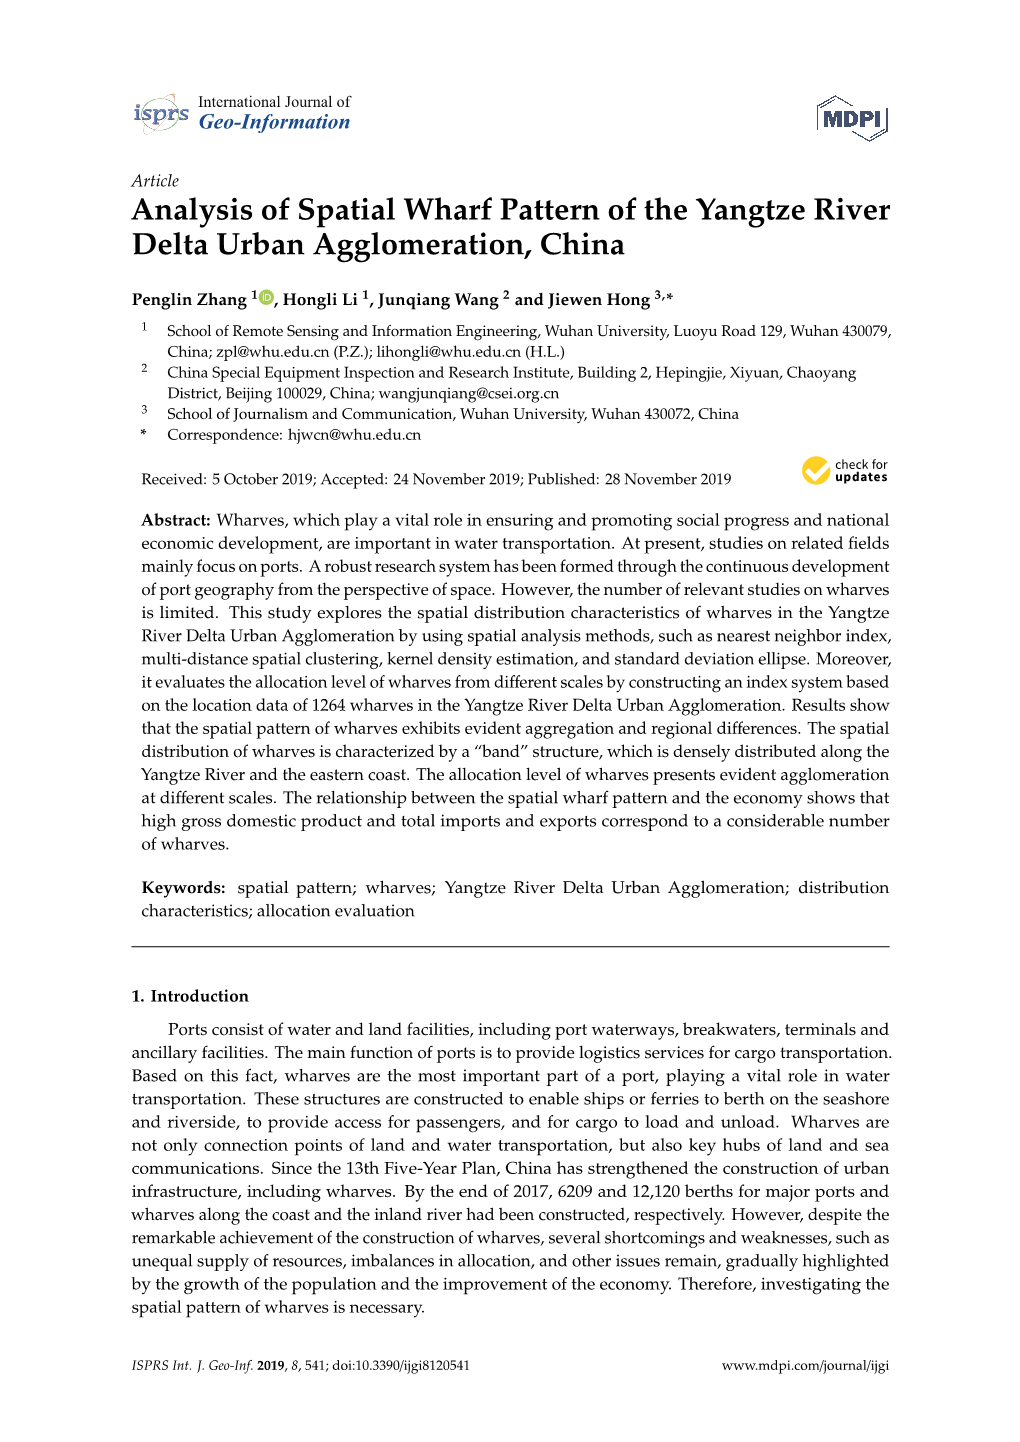 Analysis of Spatial Wharf Pattern of the Yangtze River Delta Urban Agglomeration, China